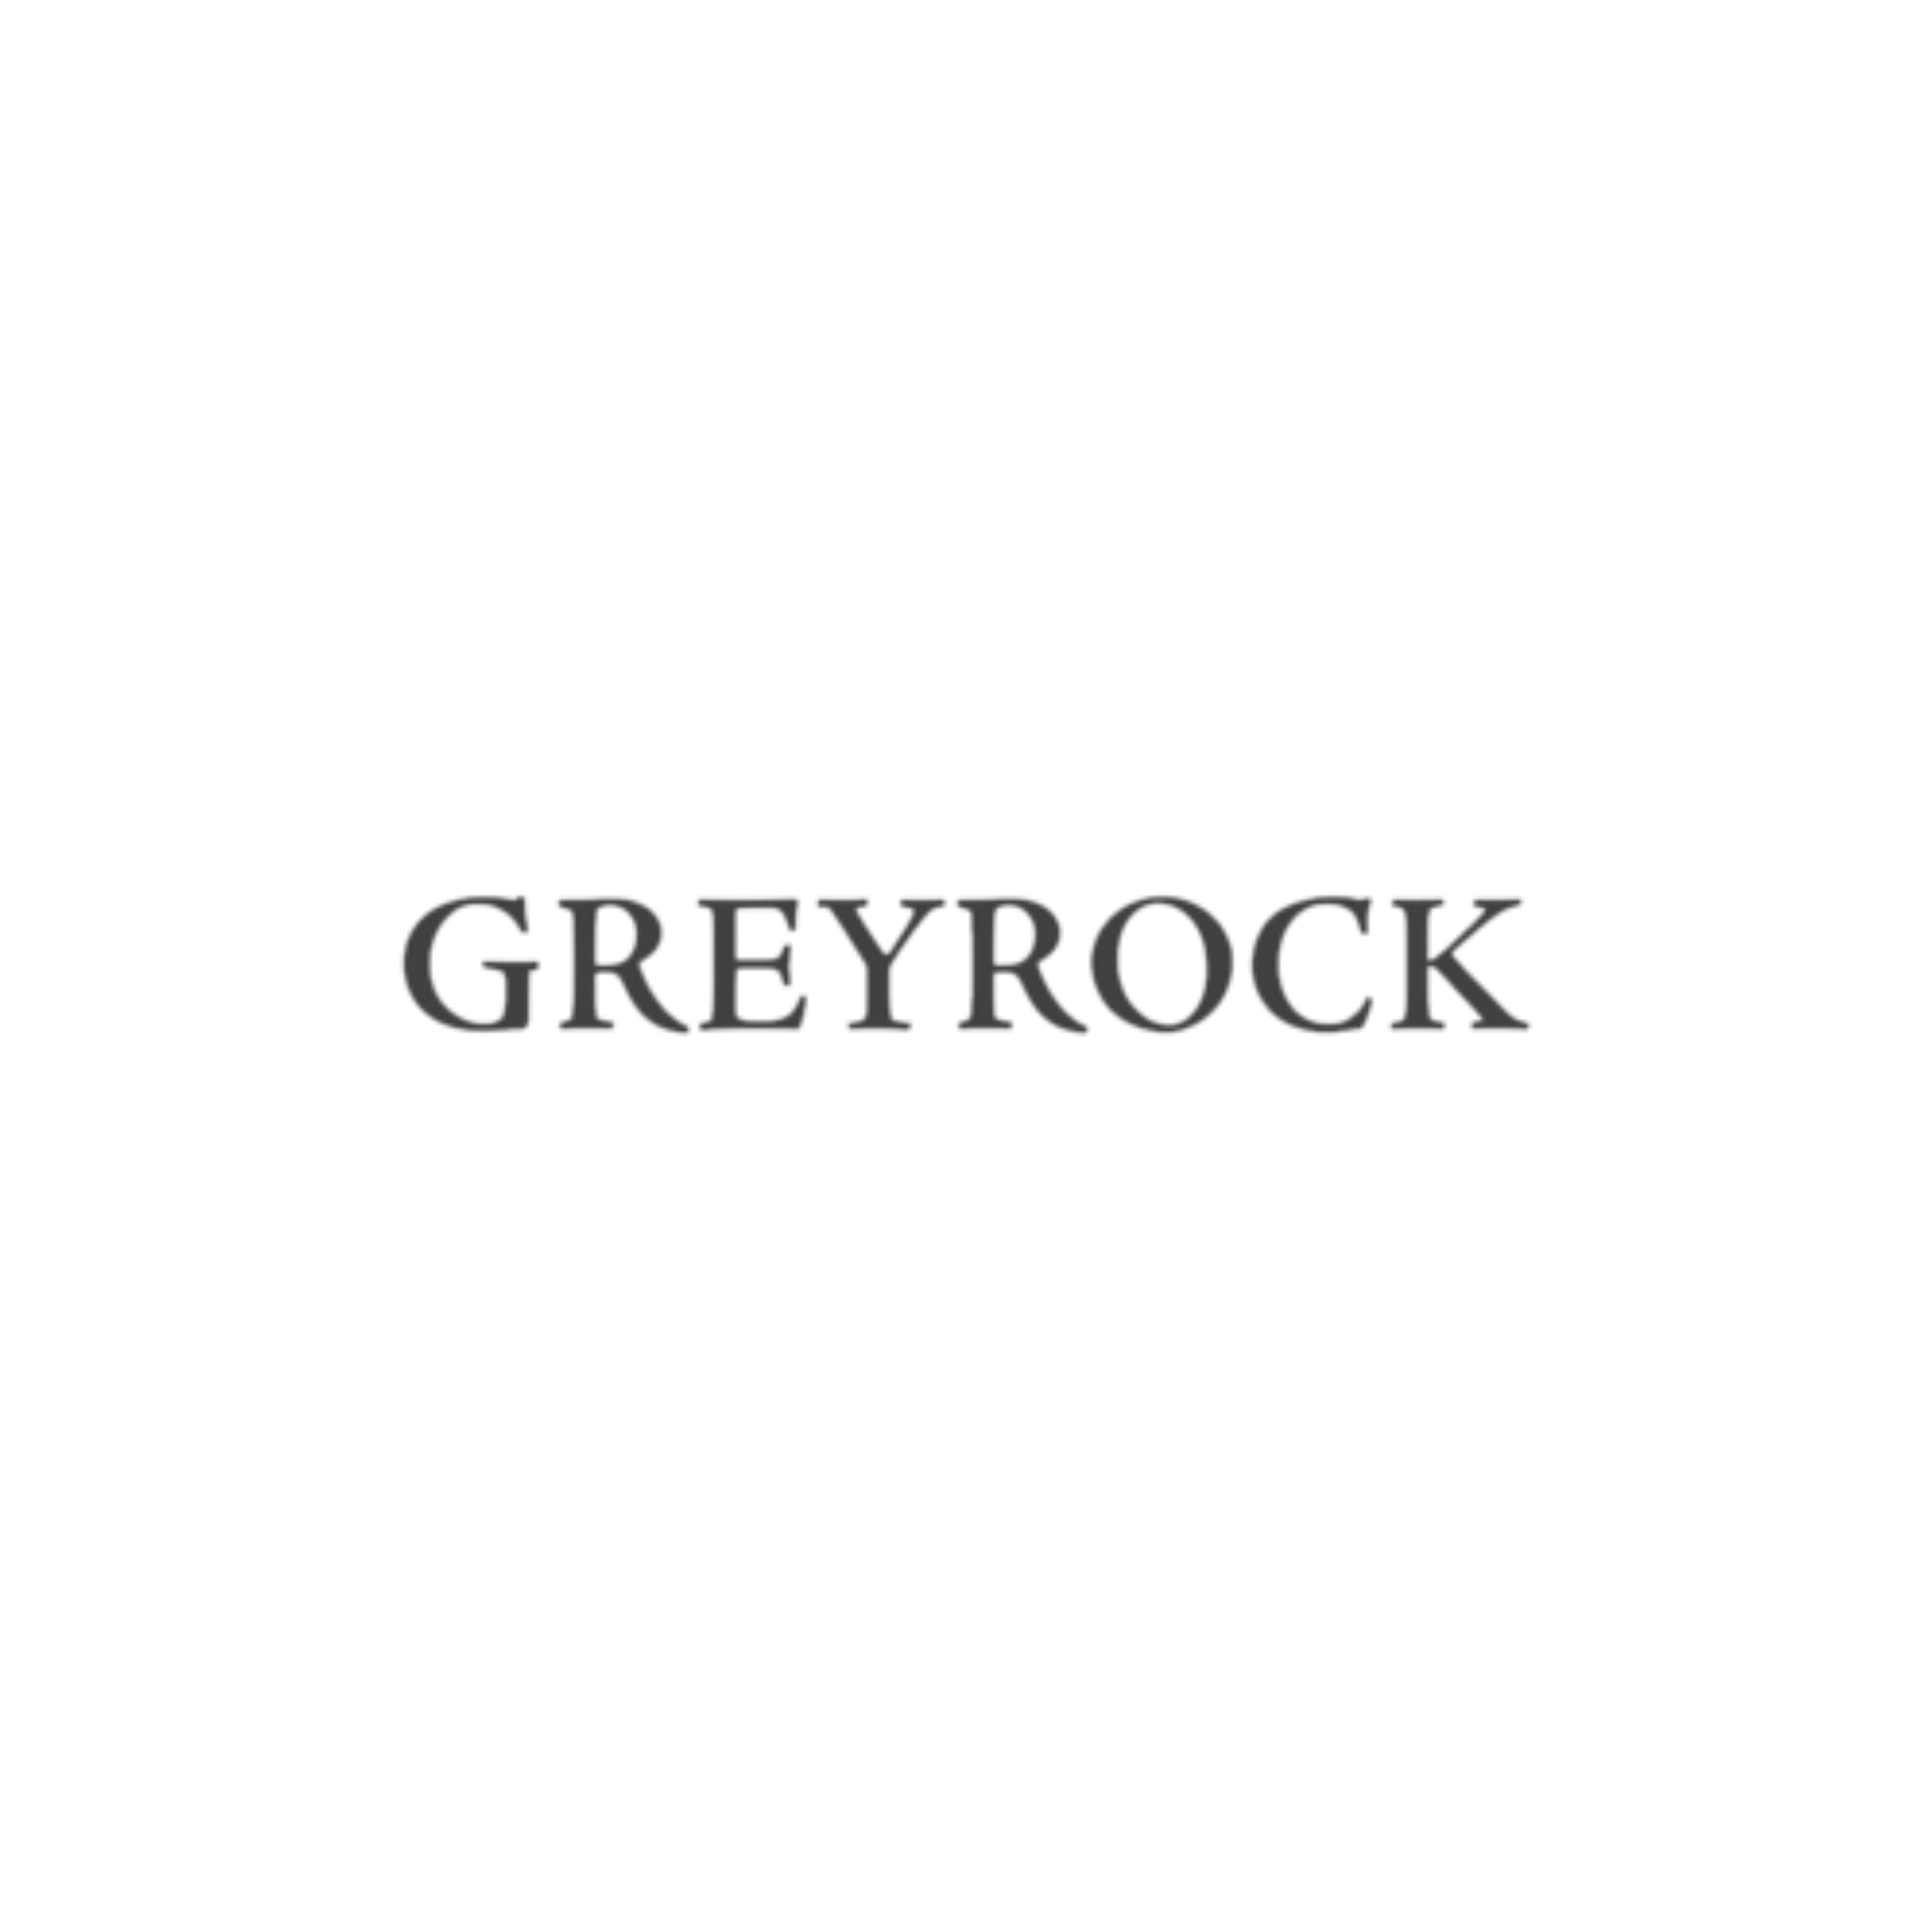 Greyrock.png